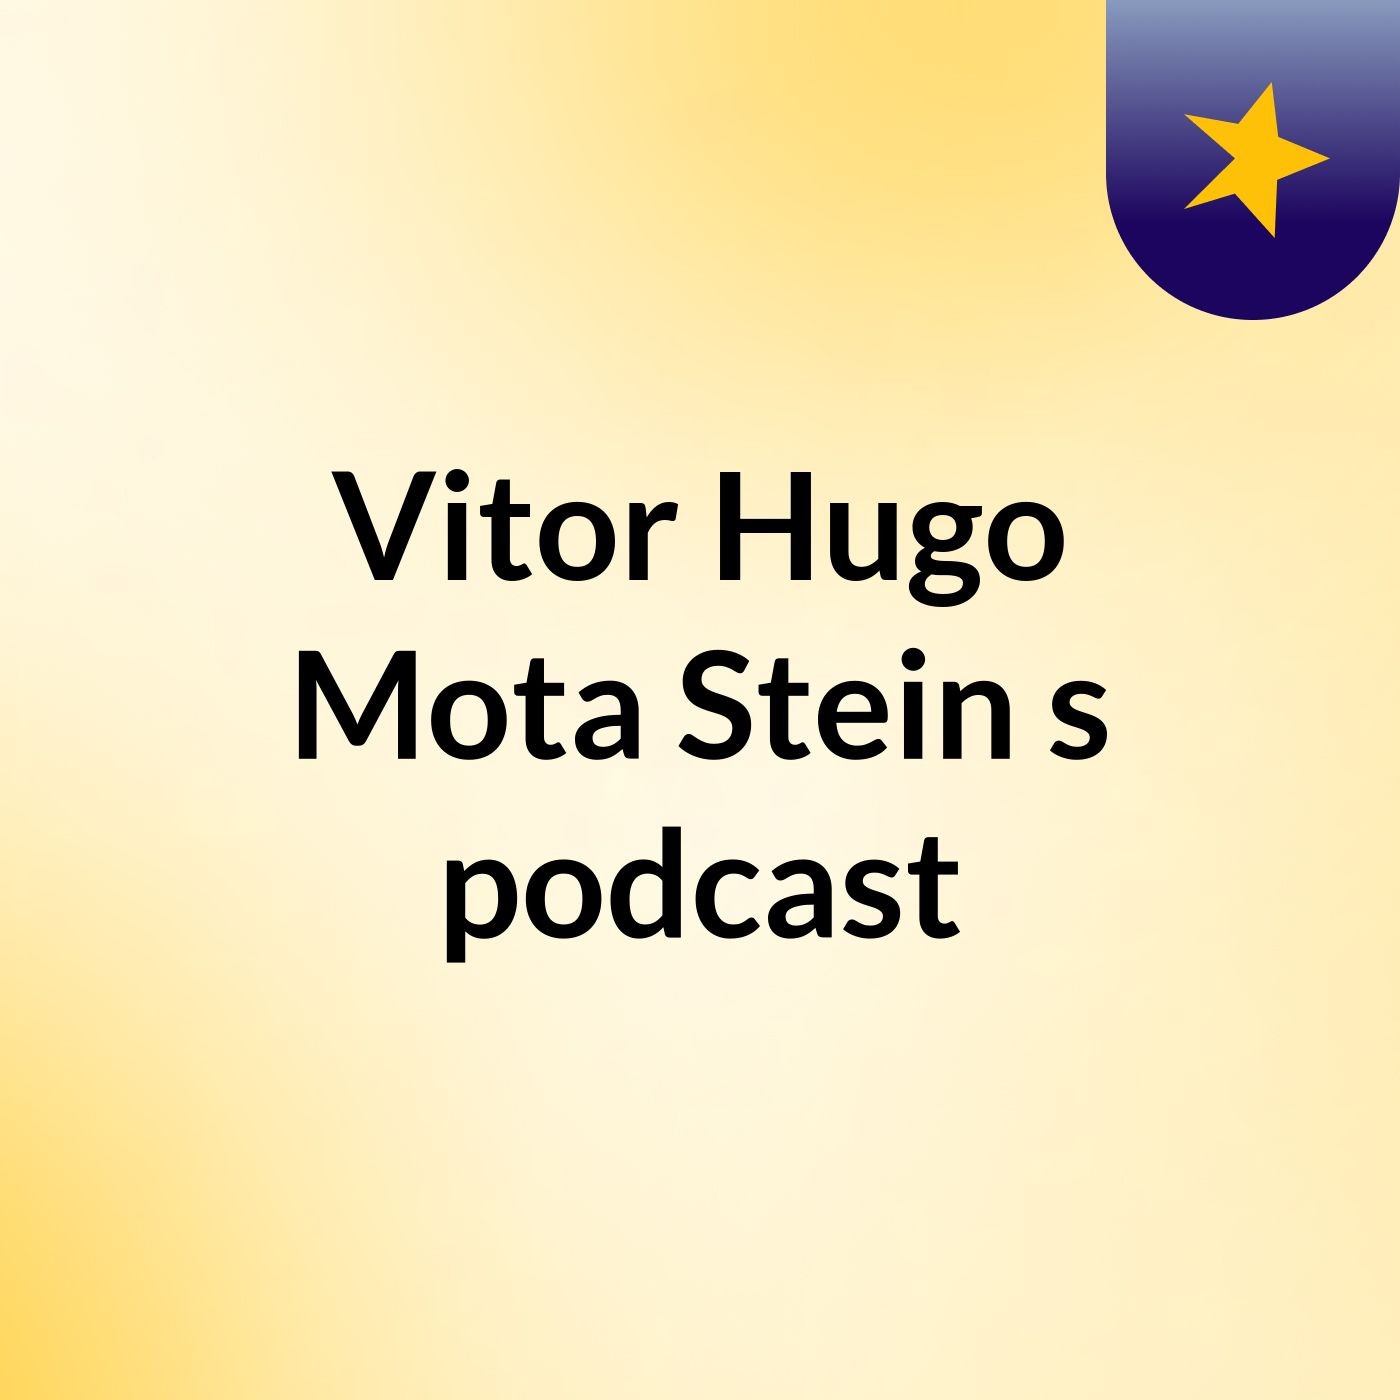 Vitor Hugo Mota Stein's podcast